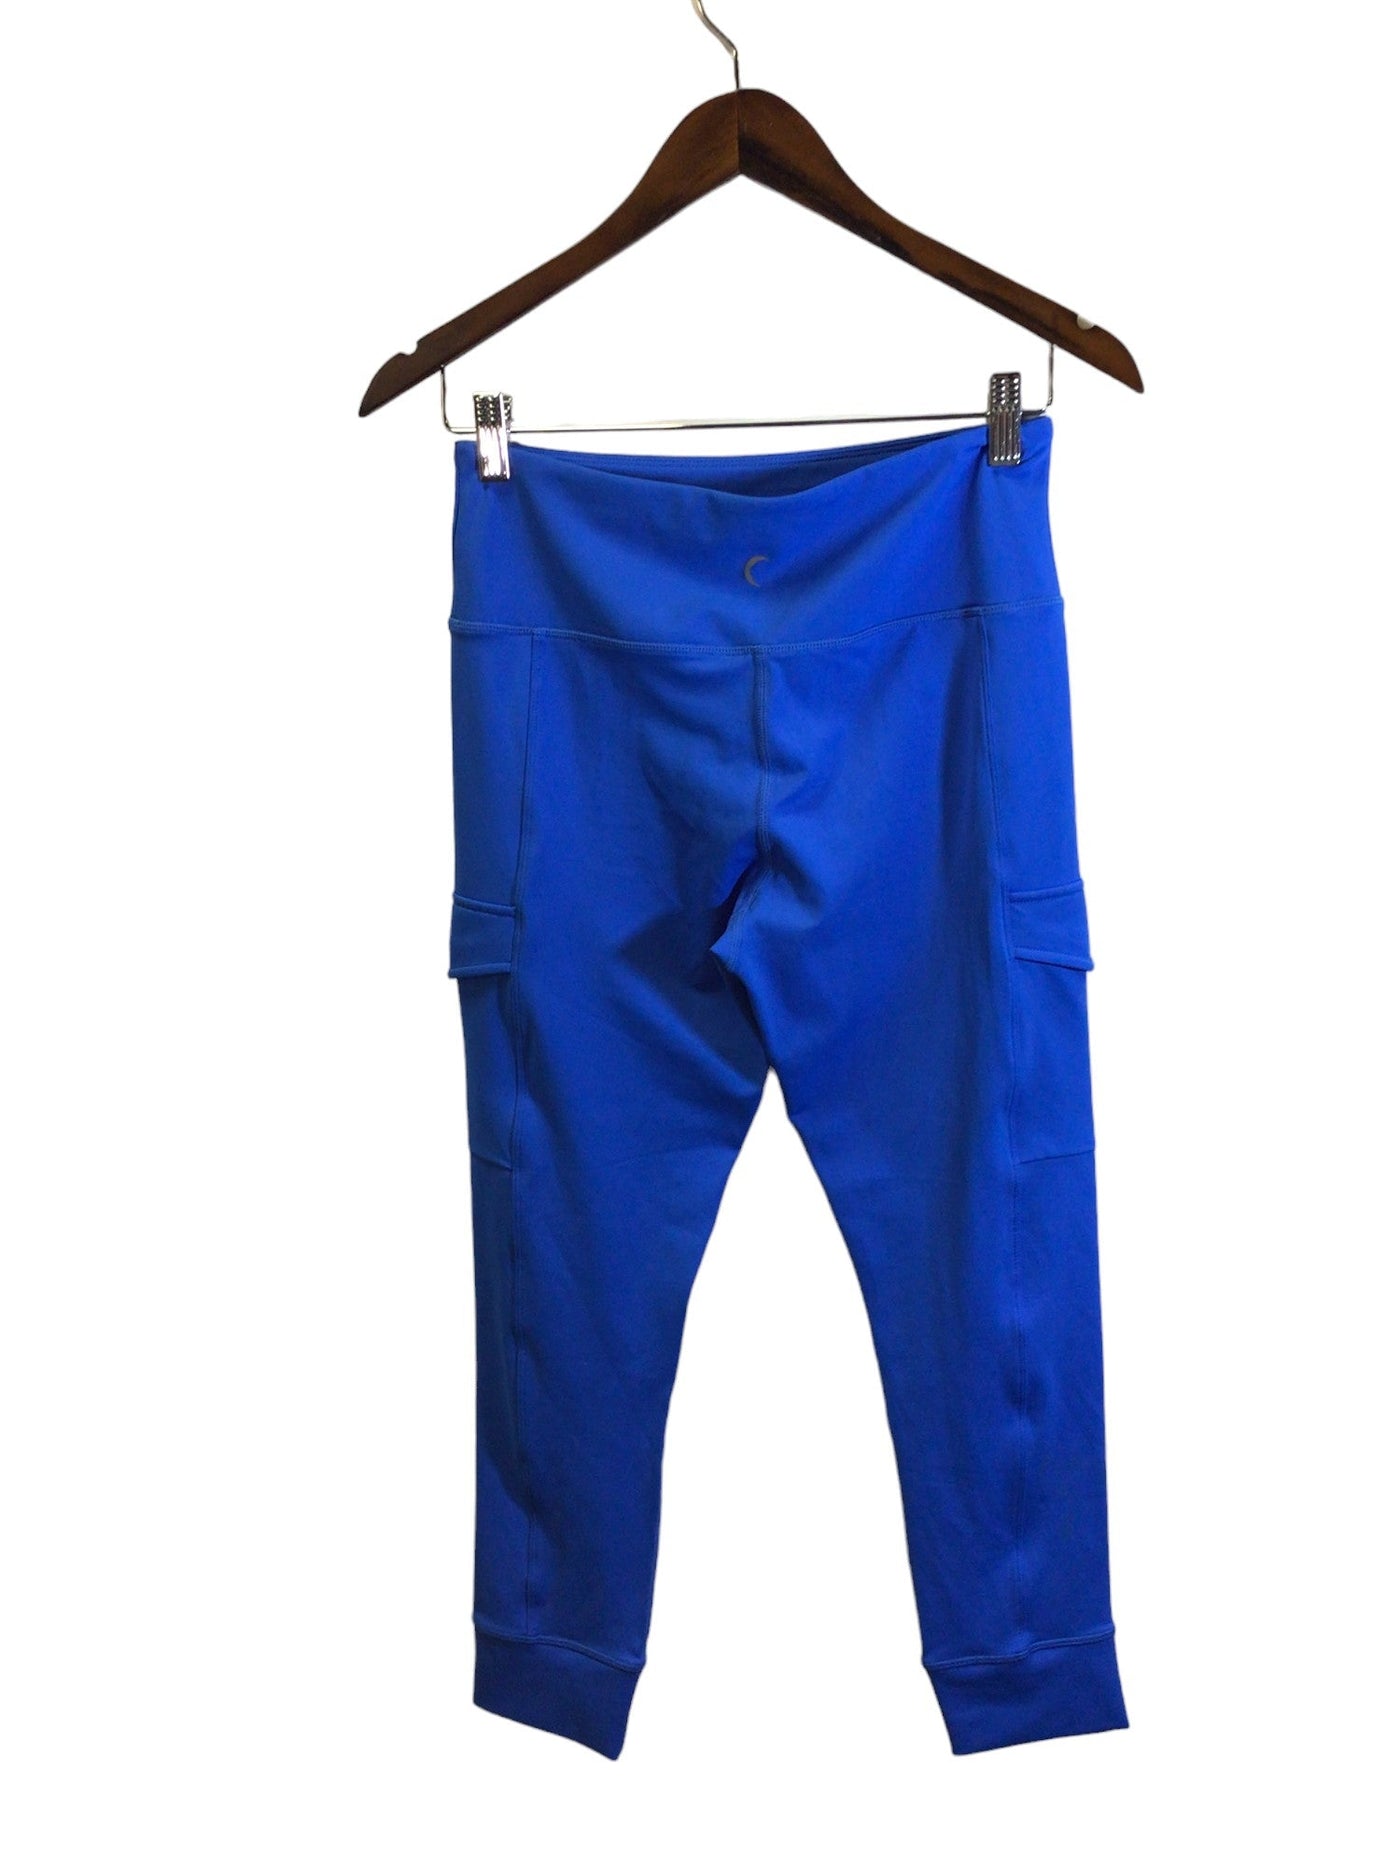 UNBRANDED Women Activewear Leggings Regular fit in Blue - Size S | 9.99 $ KOOP